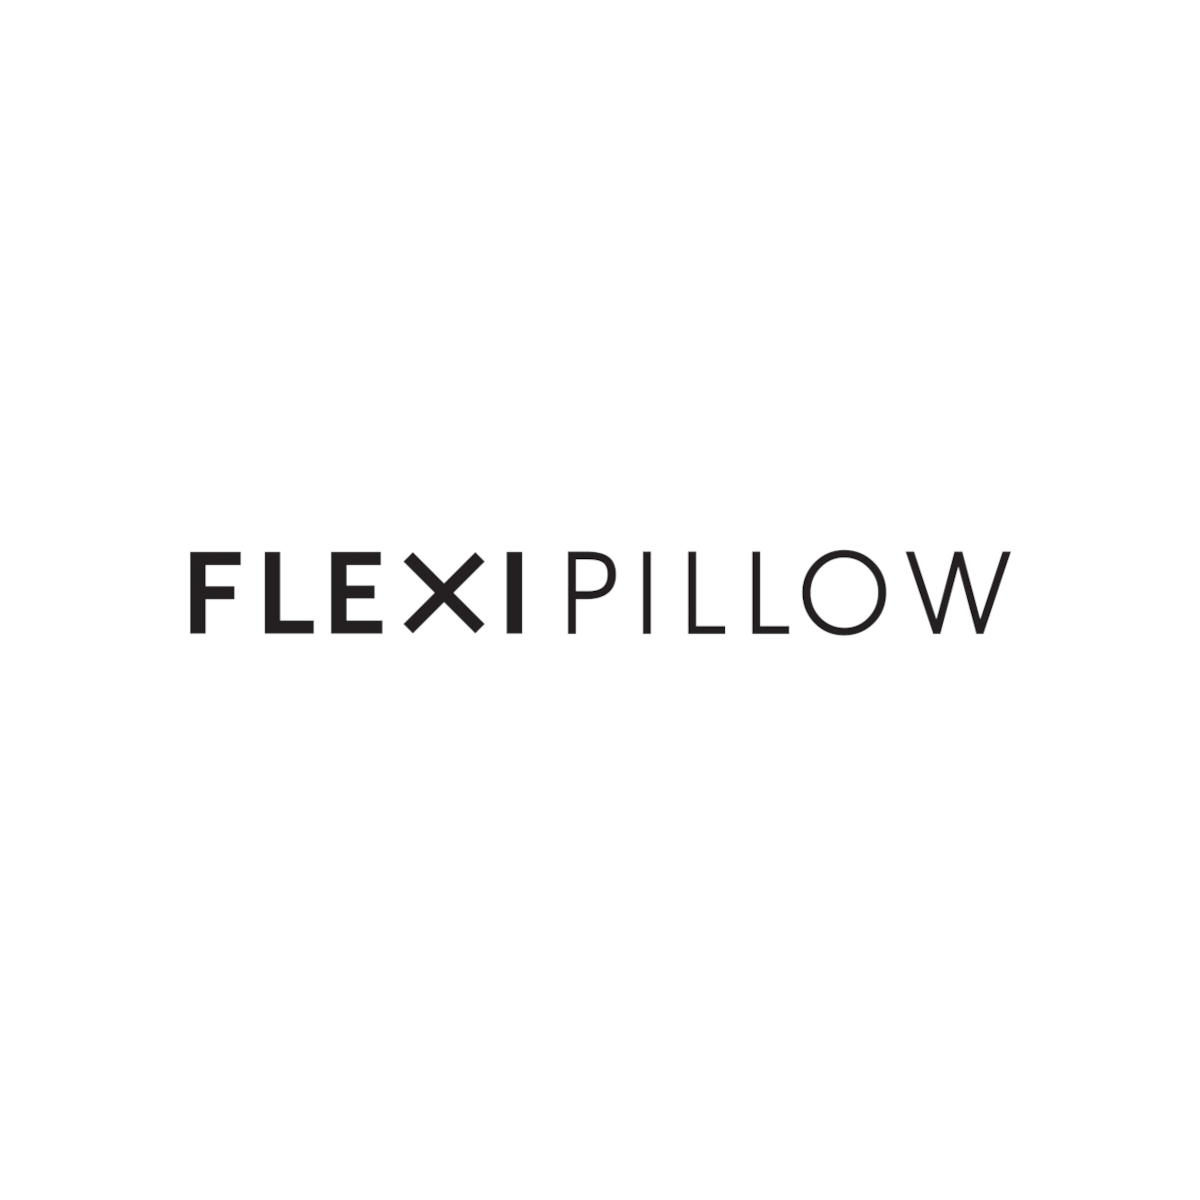 Flexi Pillow